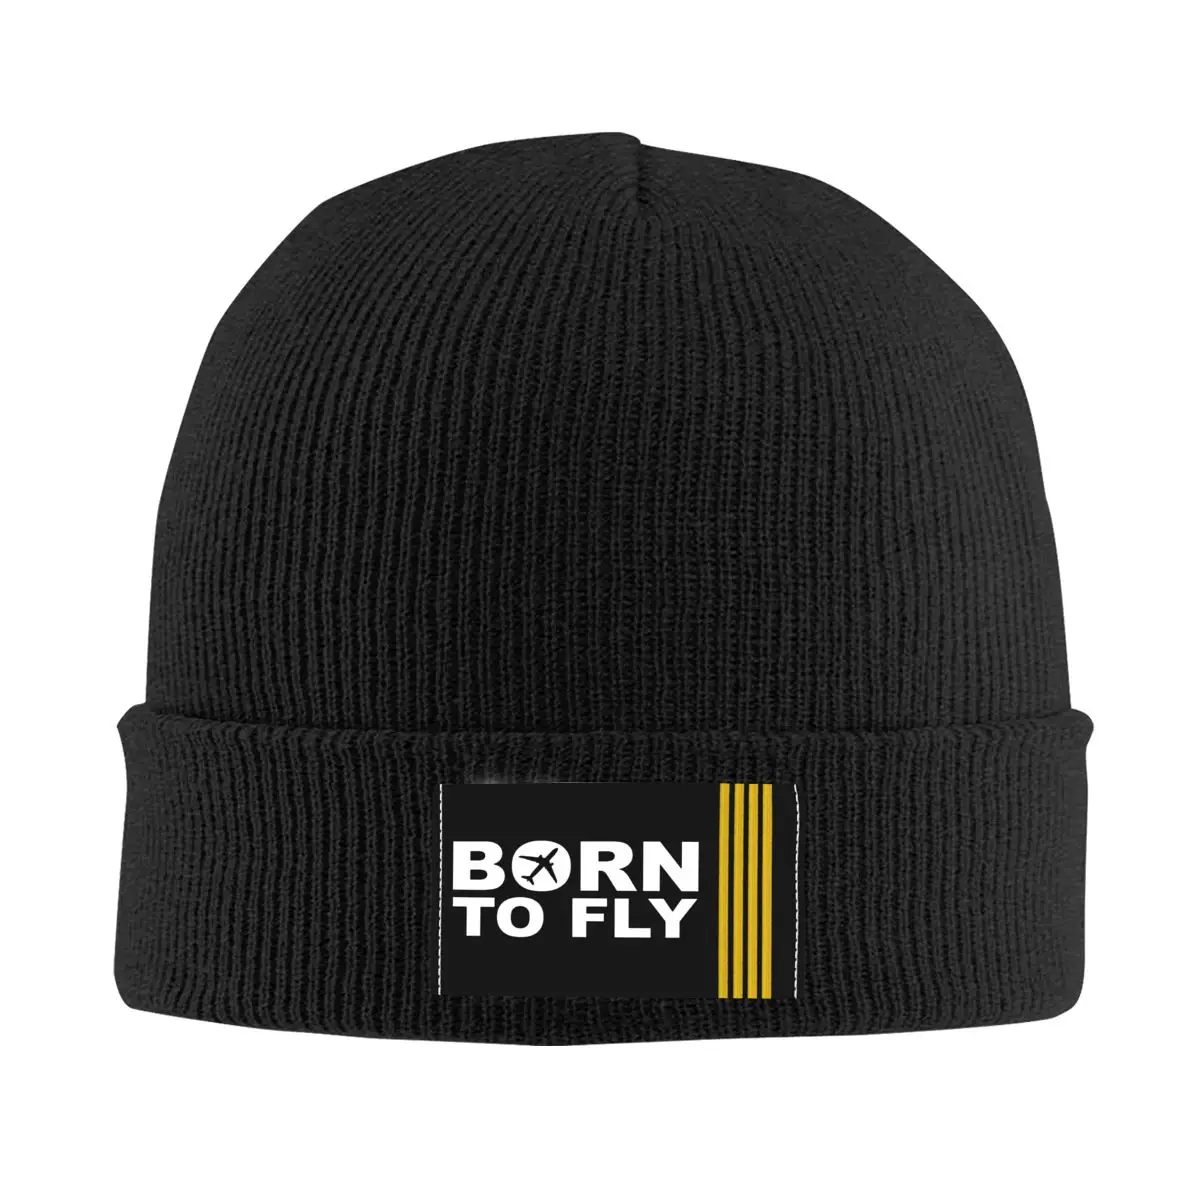 

Born To Fly Captain Stripes Skullies Beanies Caps Hip Hop Winter Warm Knit Hats Unisex Flight Pilot Aviation Aviator Bonnet Hats